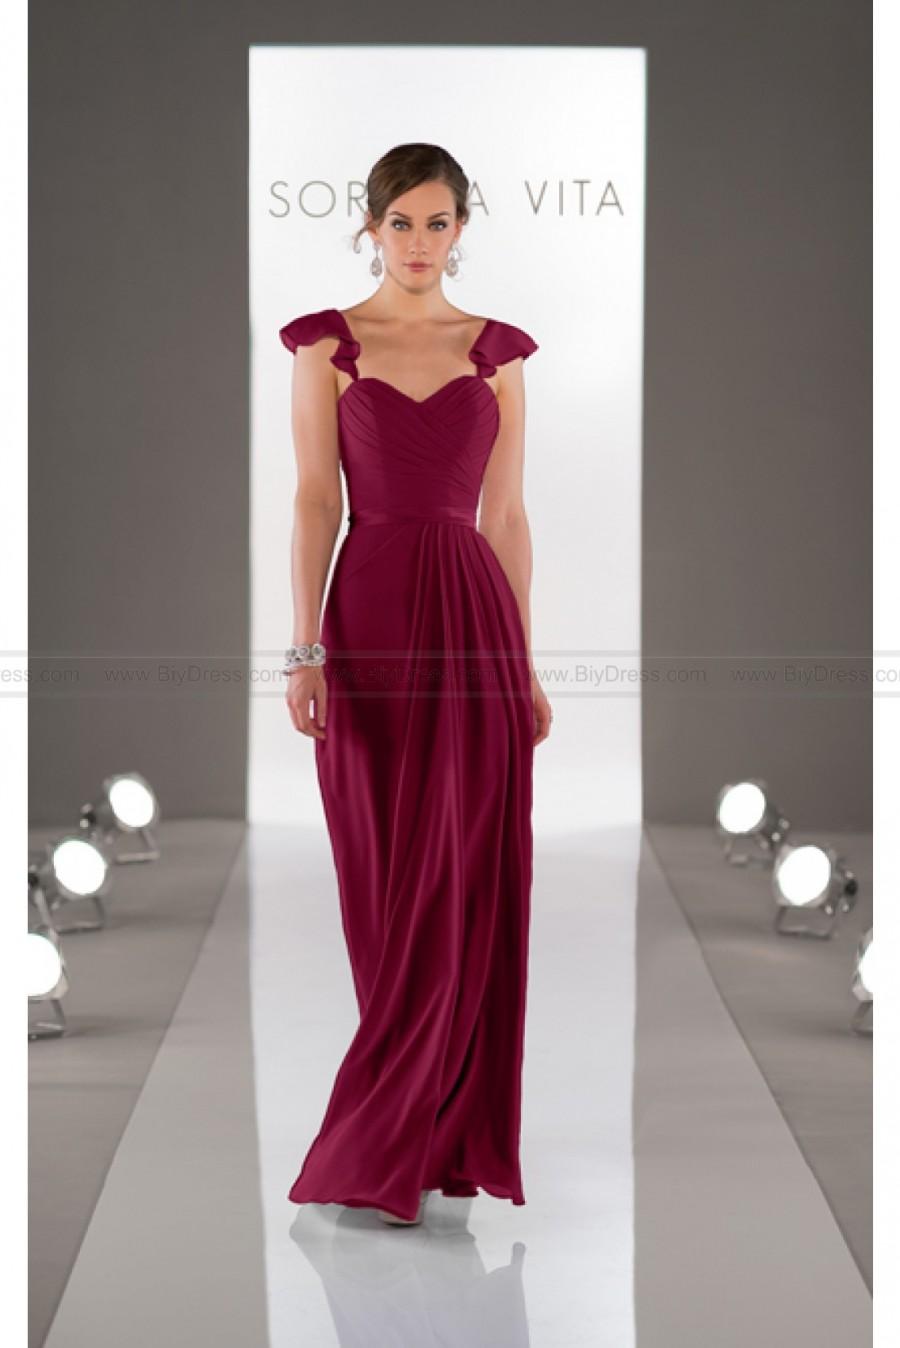 Mariage - Sorella Vita Chiffon Bridesmaid Dress Style 8446